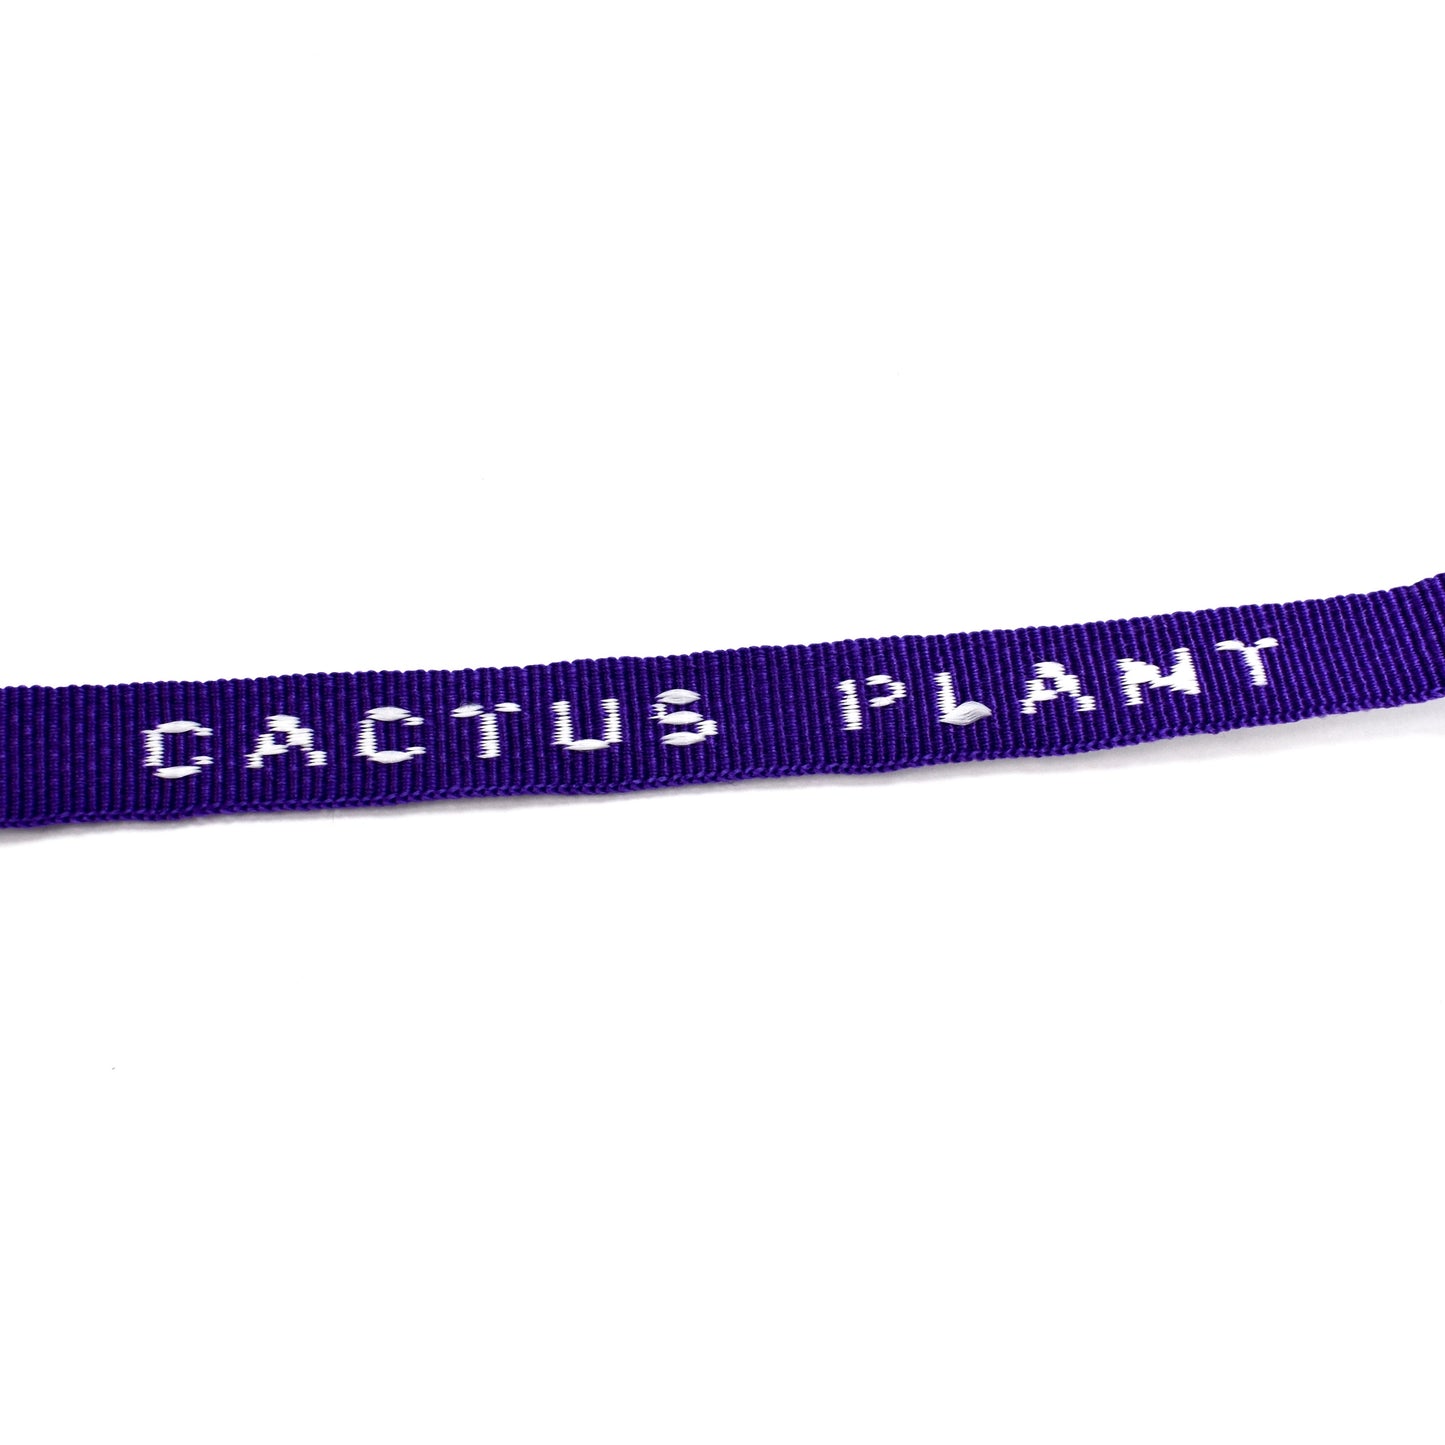 Cactus Plant Flea Market - Purple Cult ID Bracelet